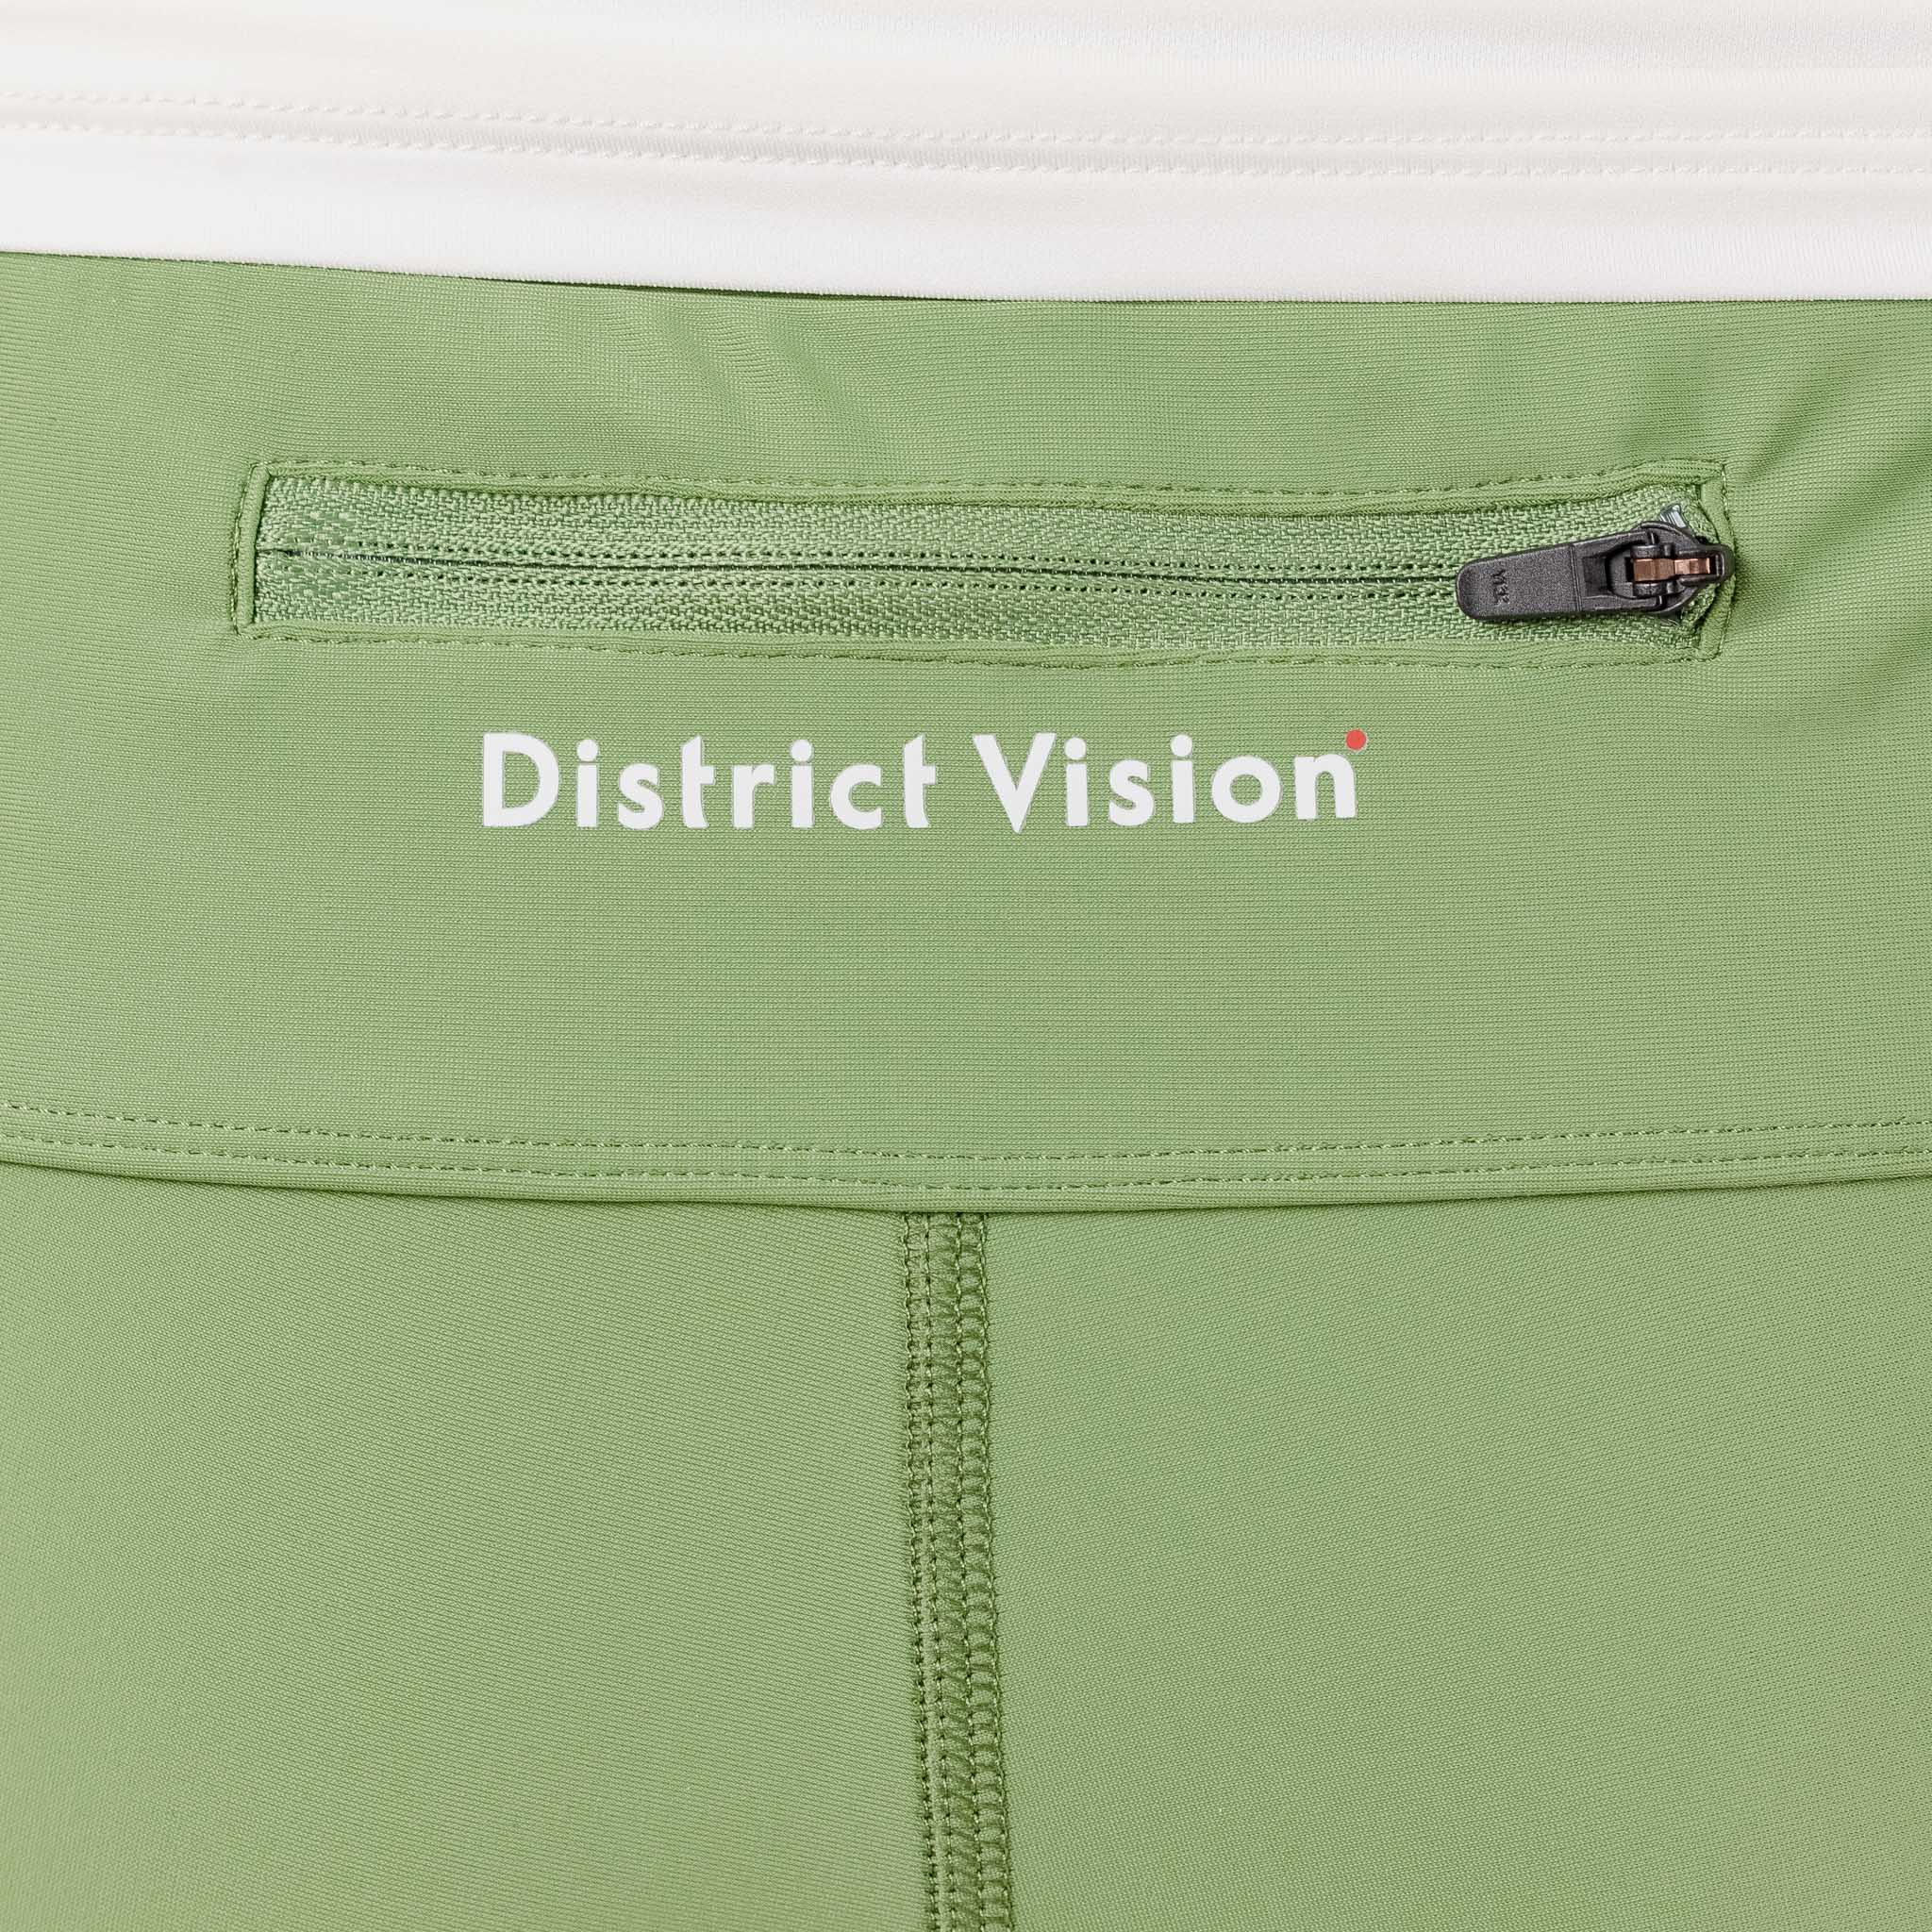 District Vision - Tom Tom 1/2 Length Run Tight Shorts - Cactus DV0004_Cactus_XL UK Stockist Best Price